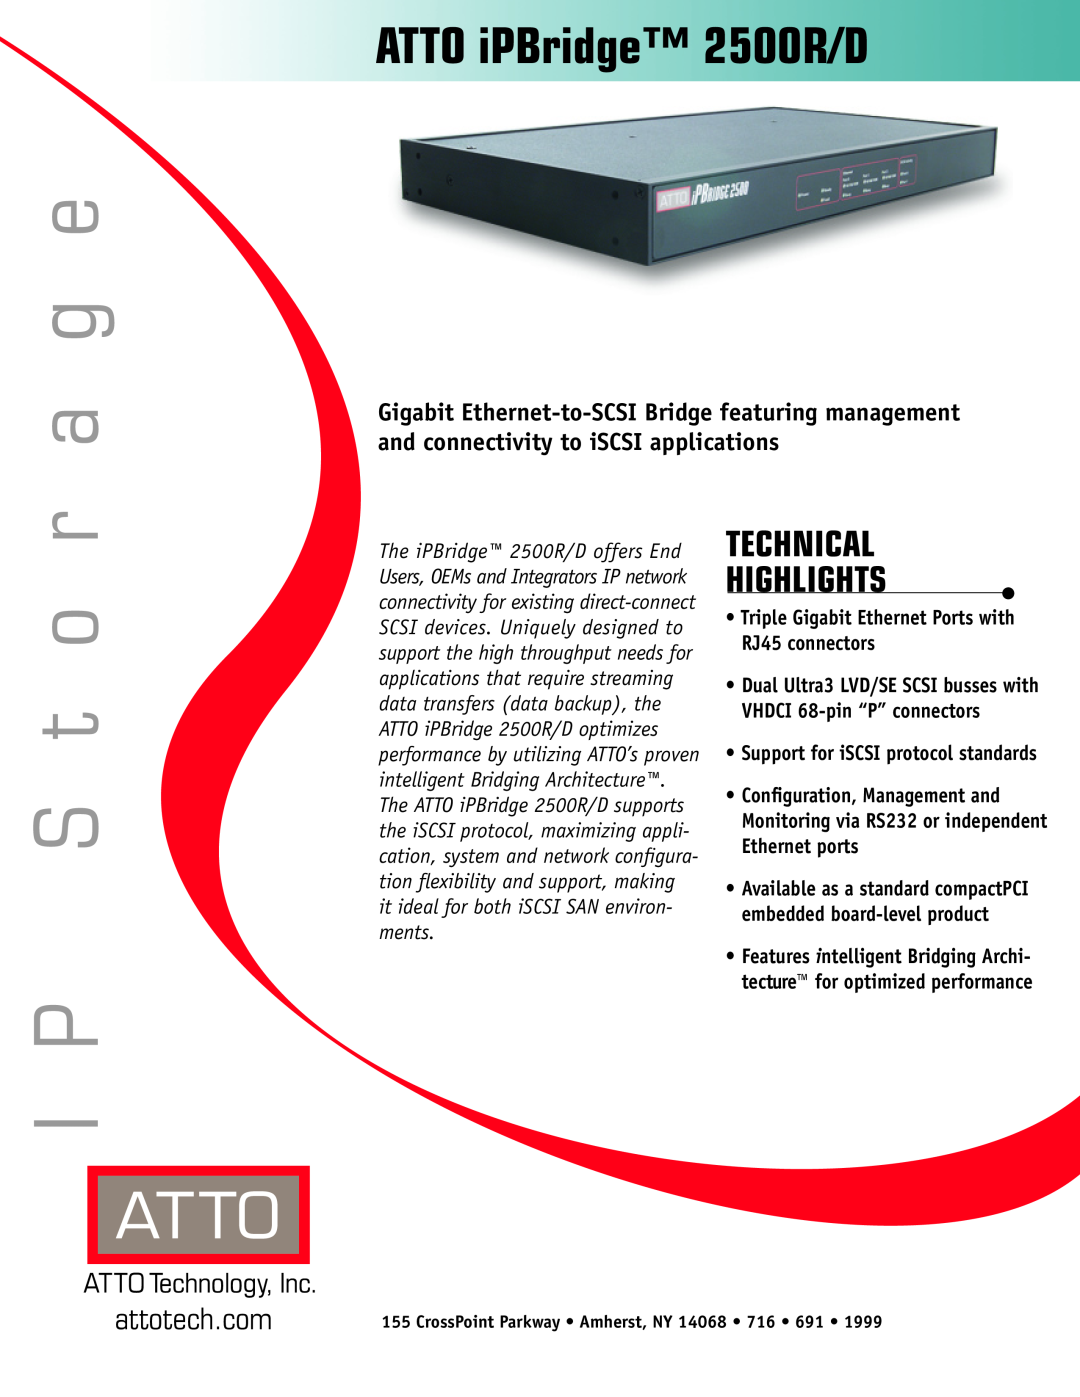 ATTO Technology manual ATTO iPBridge 2500R/D, a g e, S t o r I P, Technical Highlights, attotech.com 